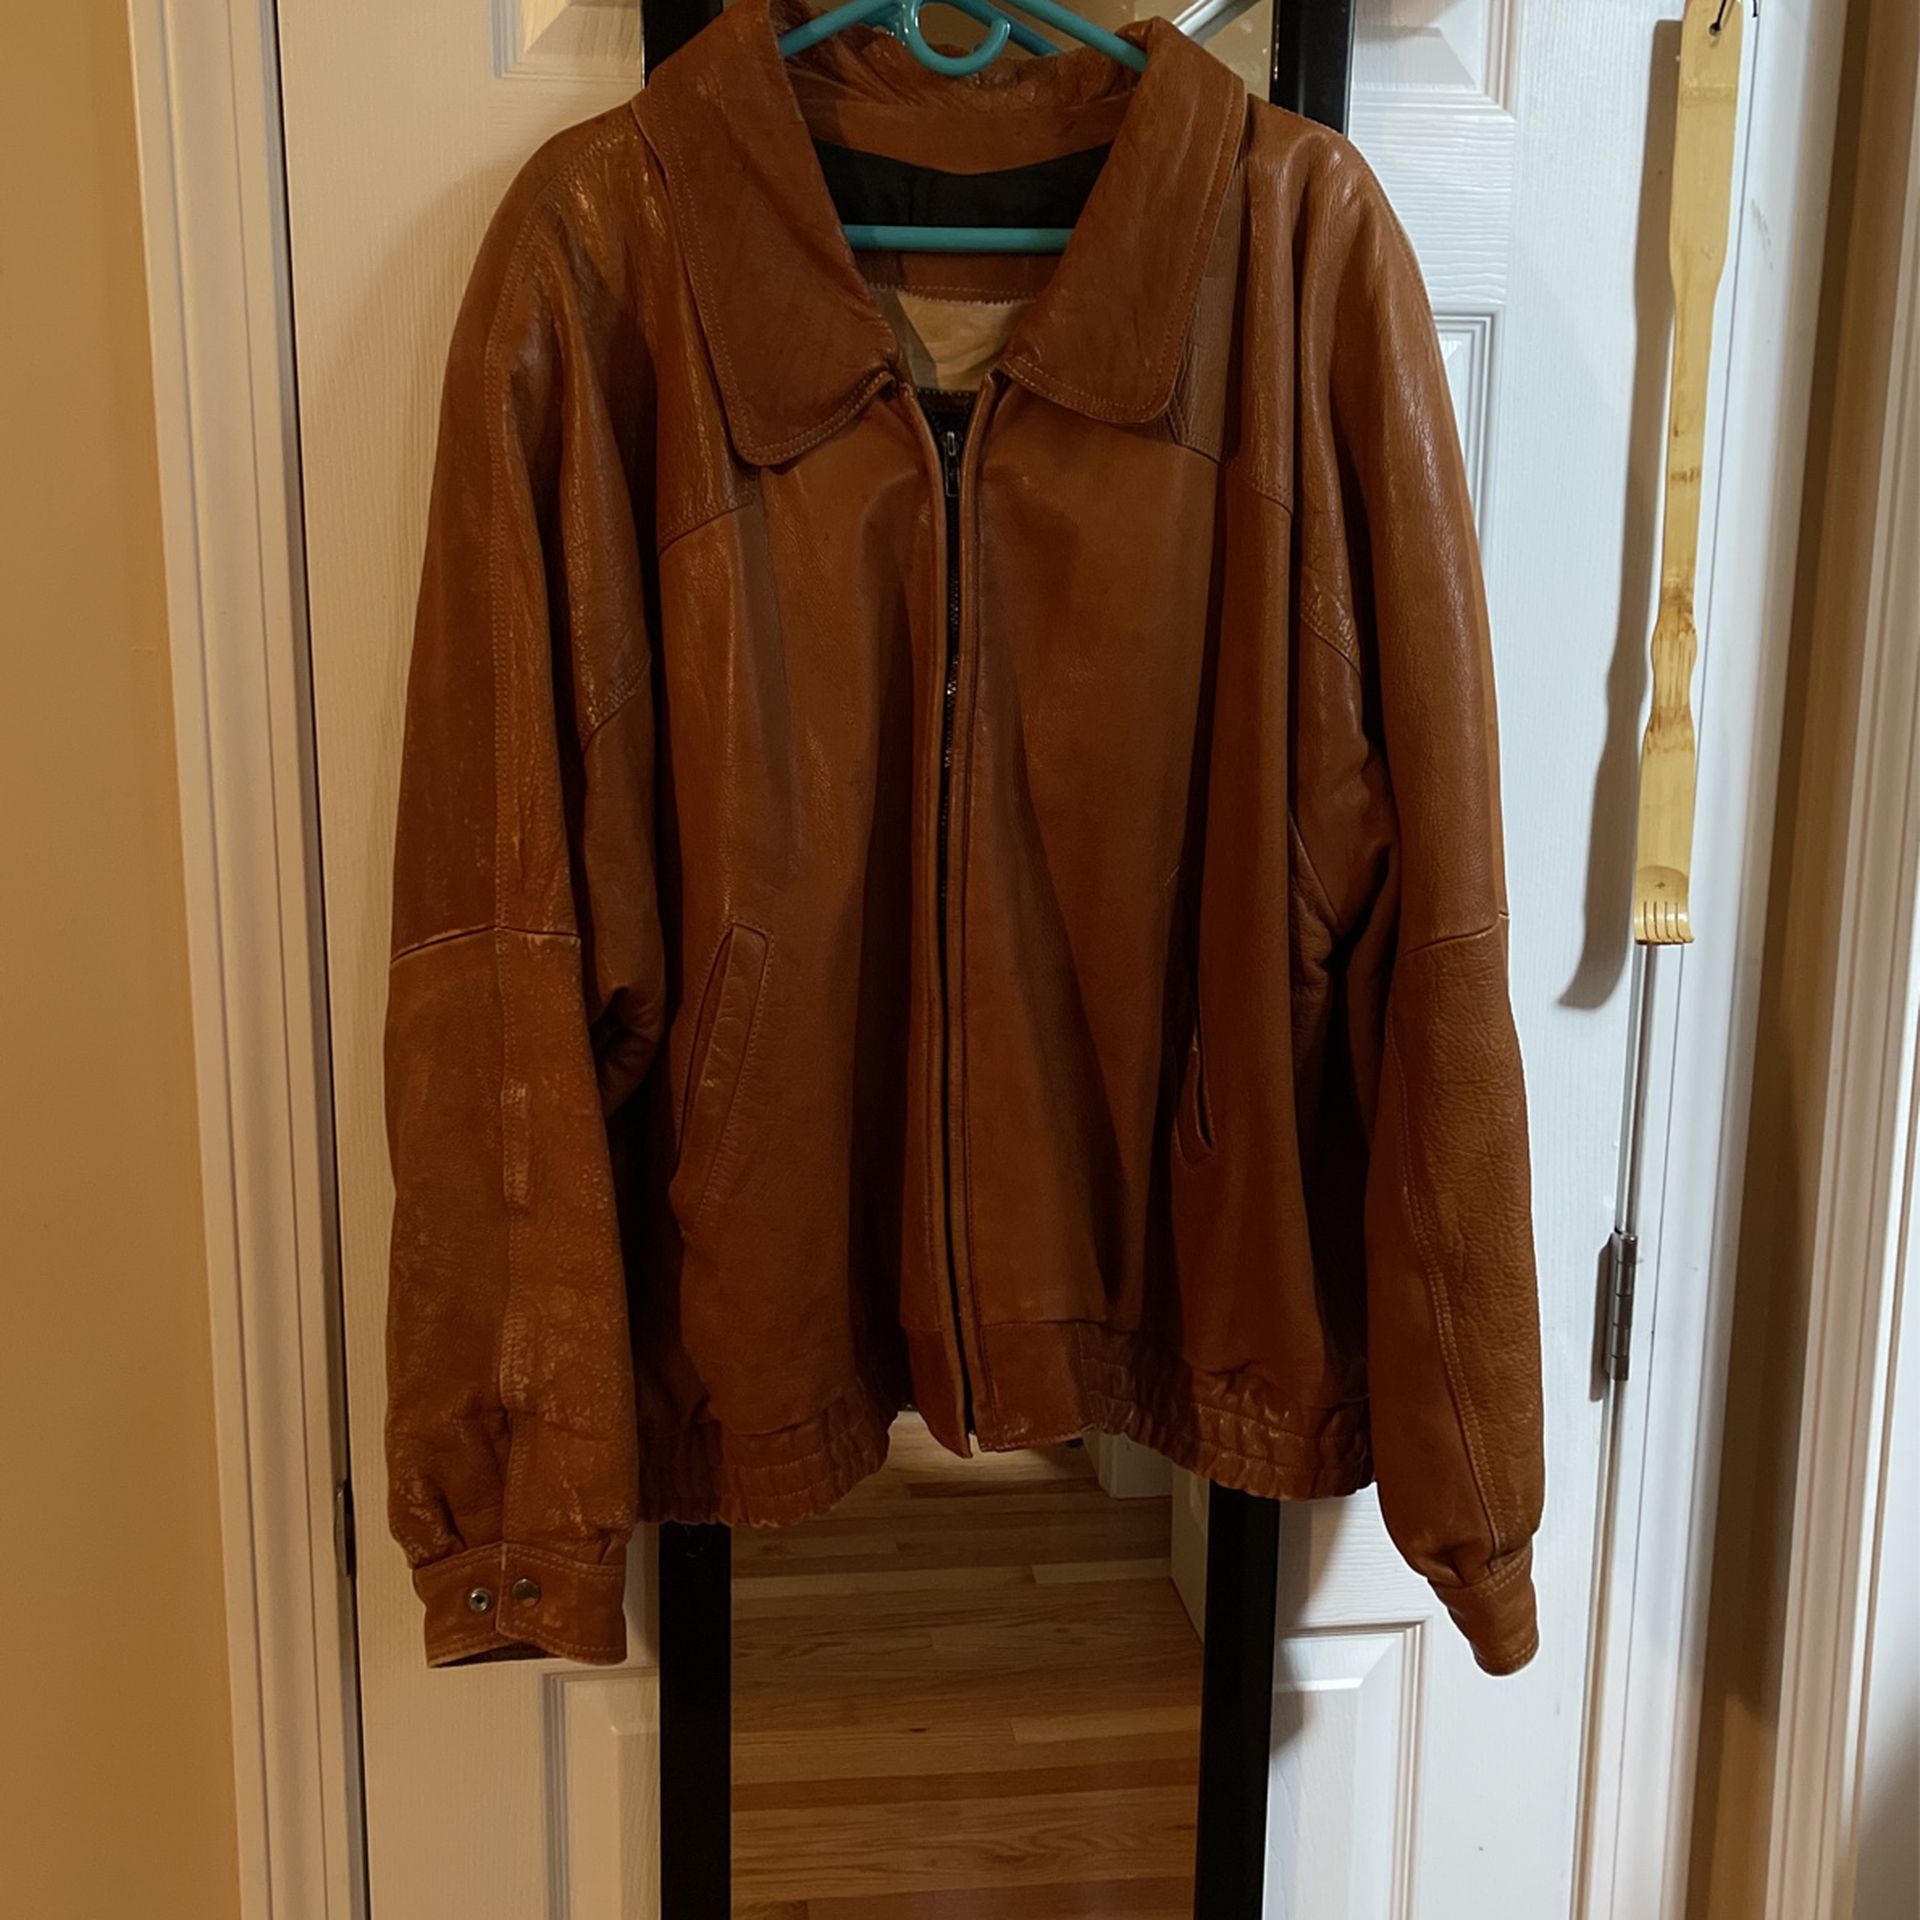 Genuine Leather Jacket XL